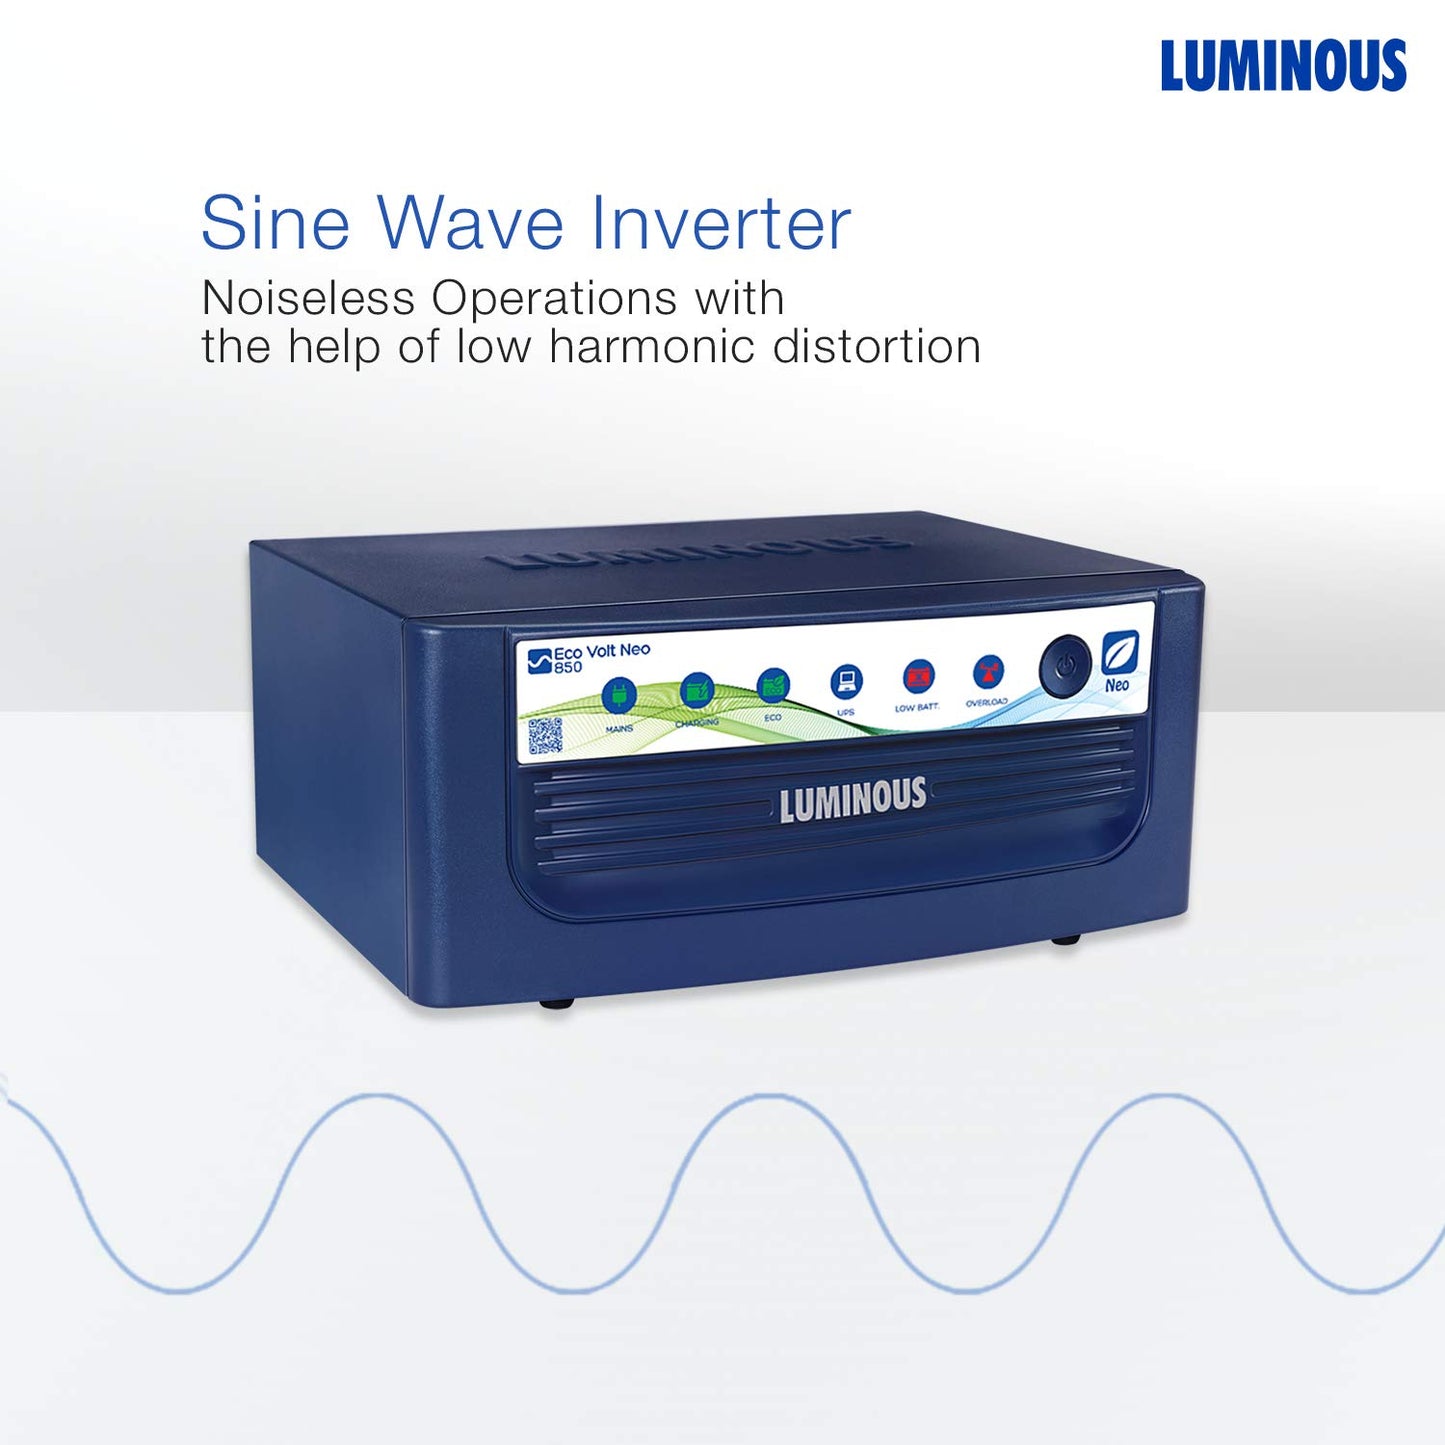 Luminous Eco Volt Neo 850 Sine Wave Inverter 700VA 2 Years Warranty